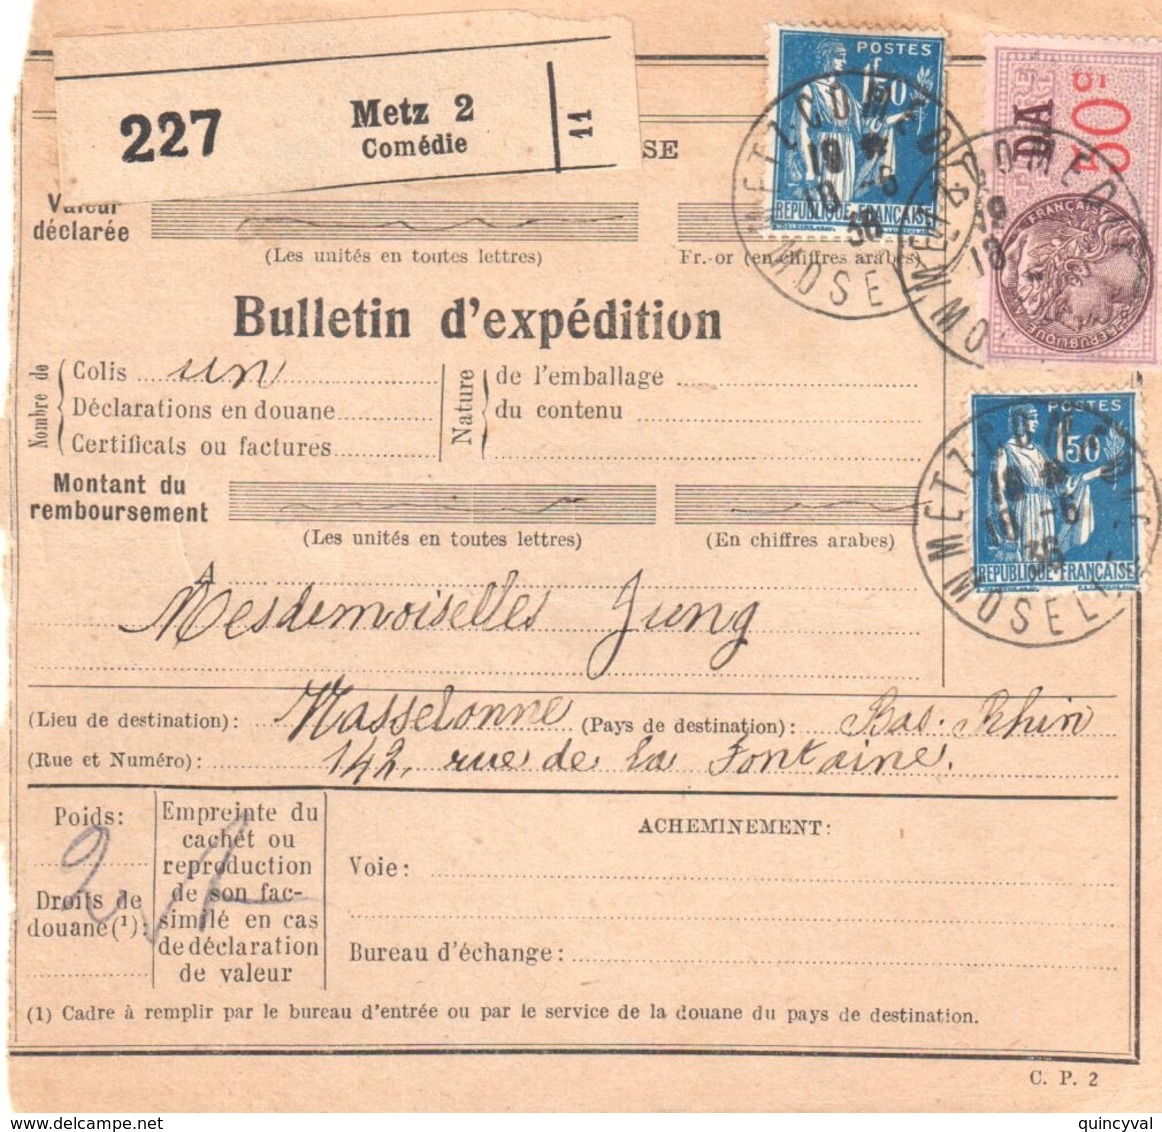 3023 Metz 2 Bulletin D'expédition Alsace Lorraine 18 6 1936 Type Paix 1,50 F Bleu Yv 288  Local < 3kg 3 F Tf 1 5 27 - Lettres & Documents